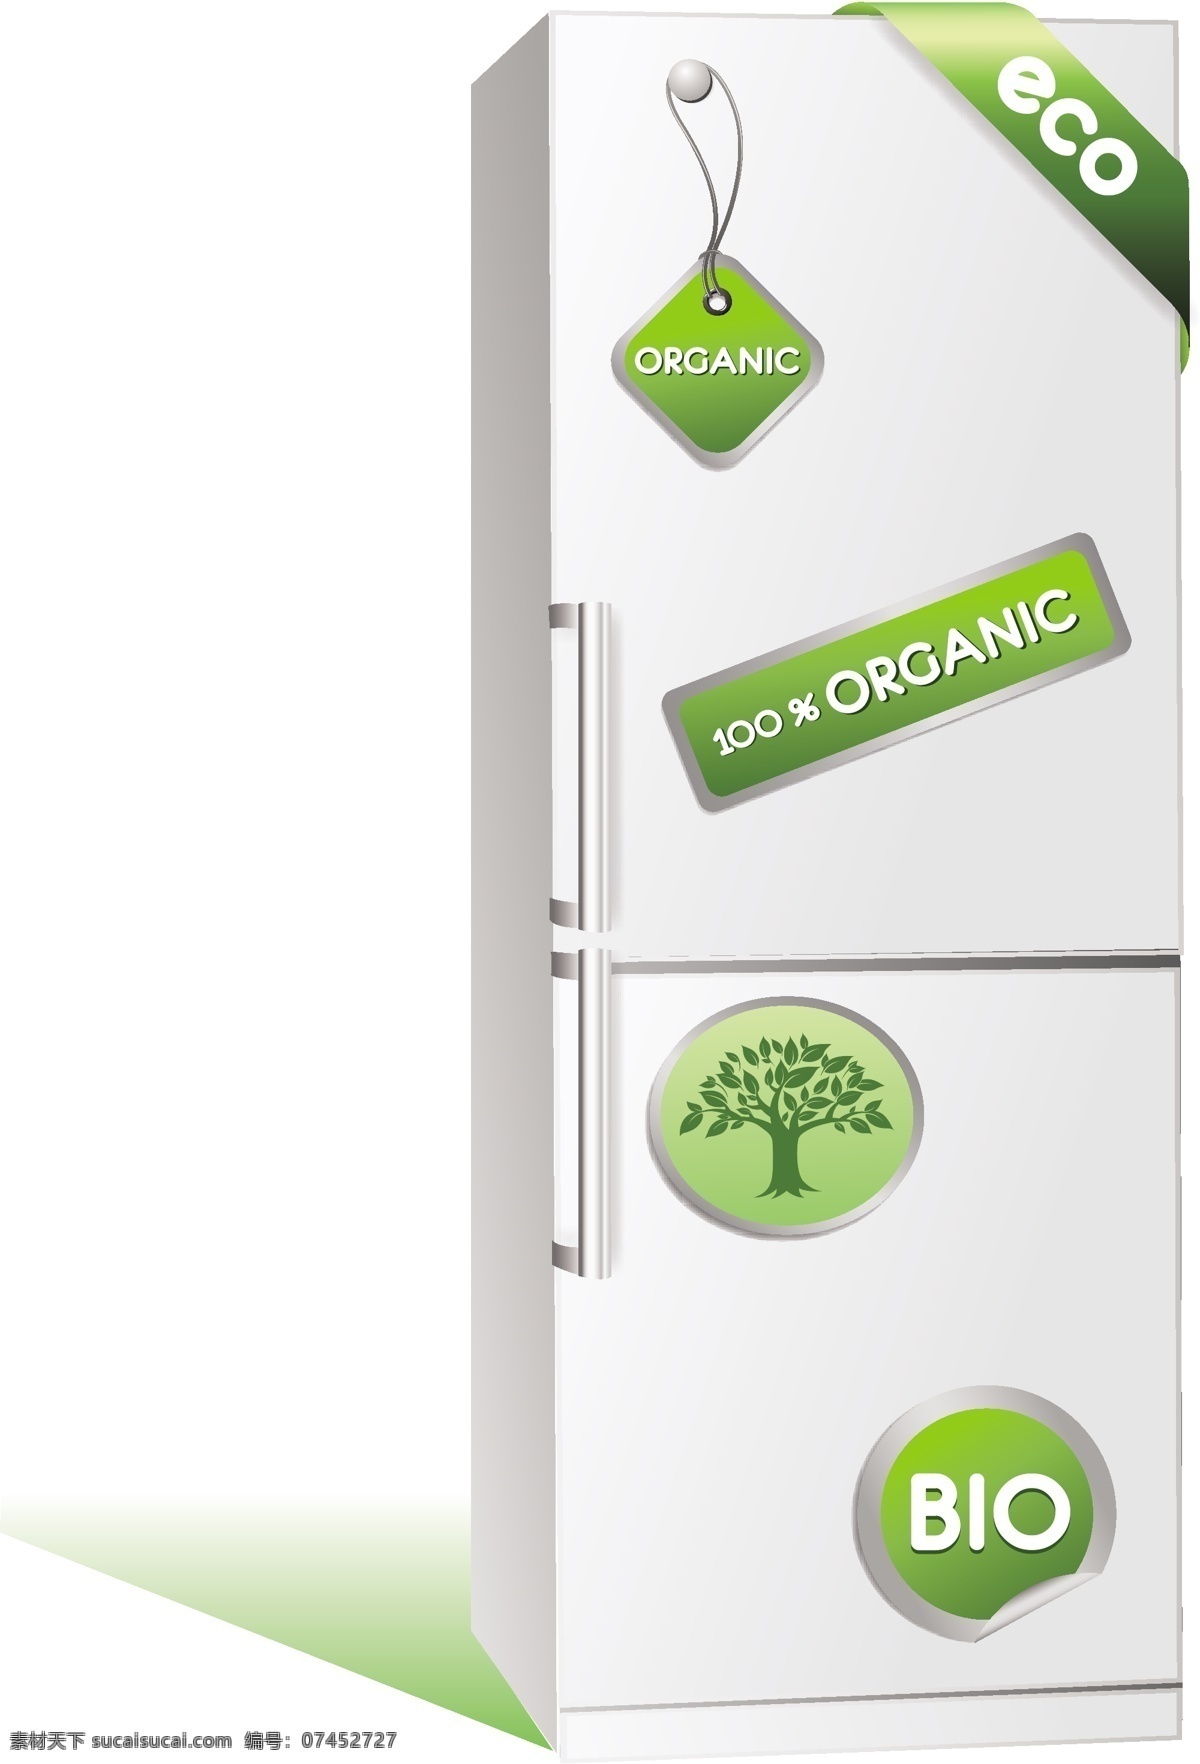 bio eco 冰箱 低碳 环保 家用电器 节能 节能冰箱 生活百科 冰箱矢量素材 冰箱模板下载 环保冰箱 矢量 生活用品 海报 环保公益海报